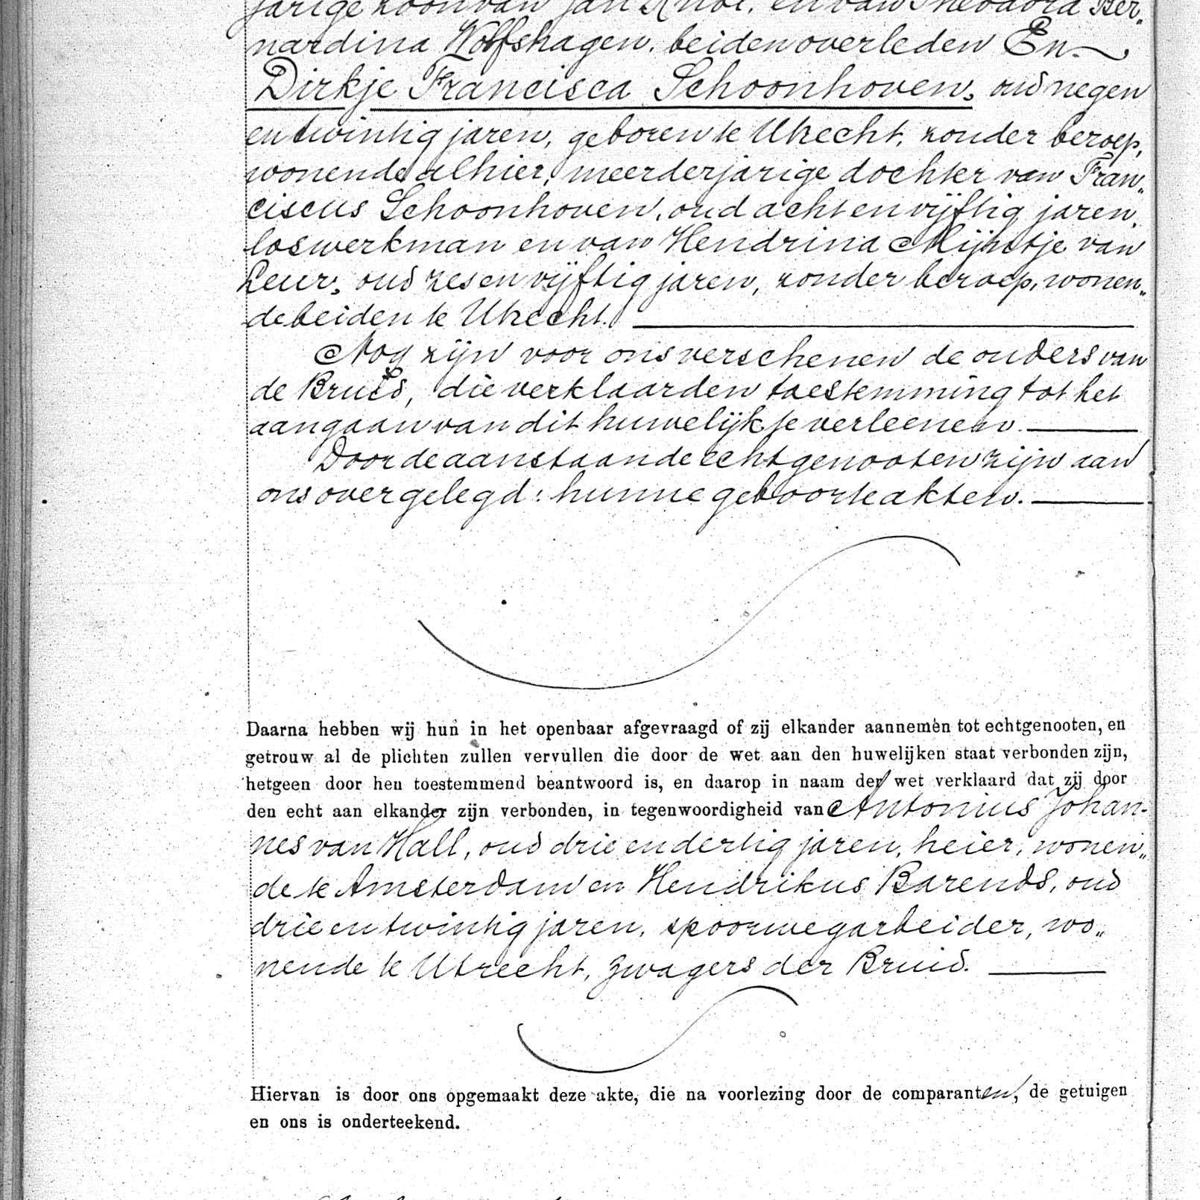 Civil registry of marriages, Haarlem, 1921, record 635